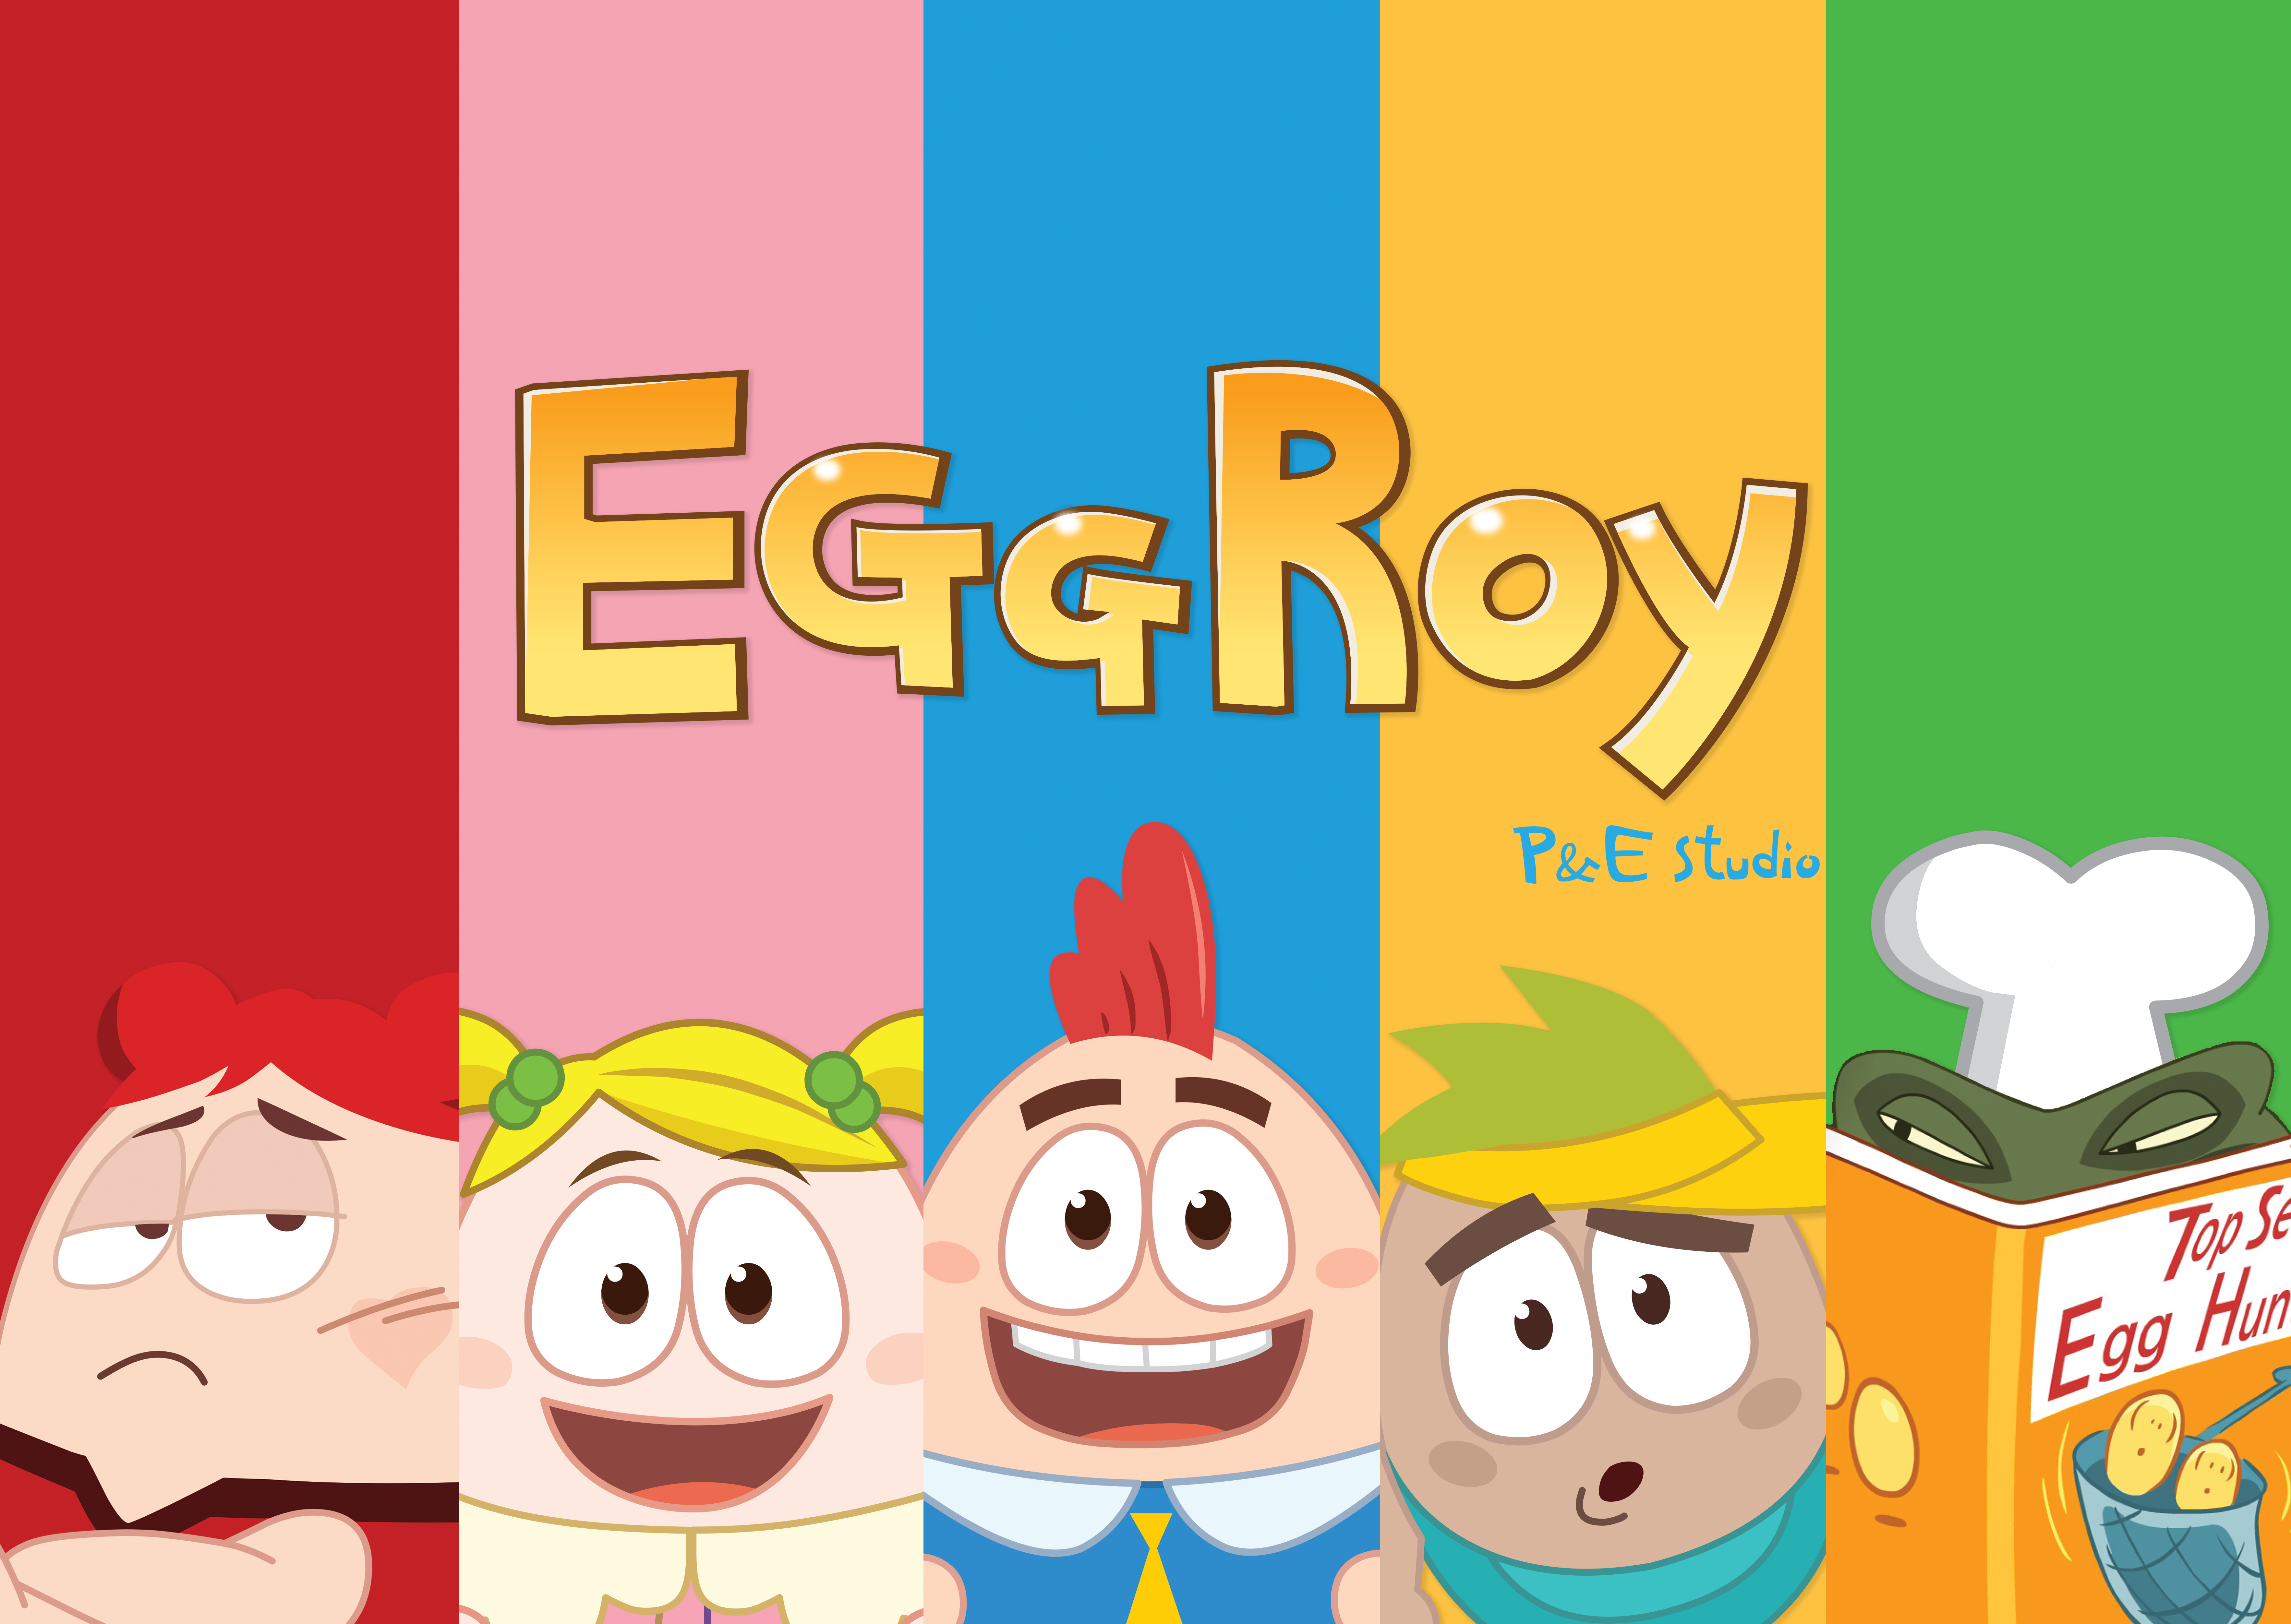 Korean Animation creation 'Eggroy' achieves 1 million views in 2 weeks |  Press Release Distribution